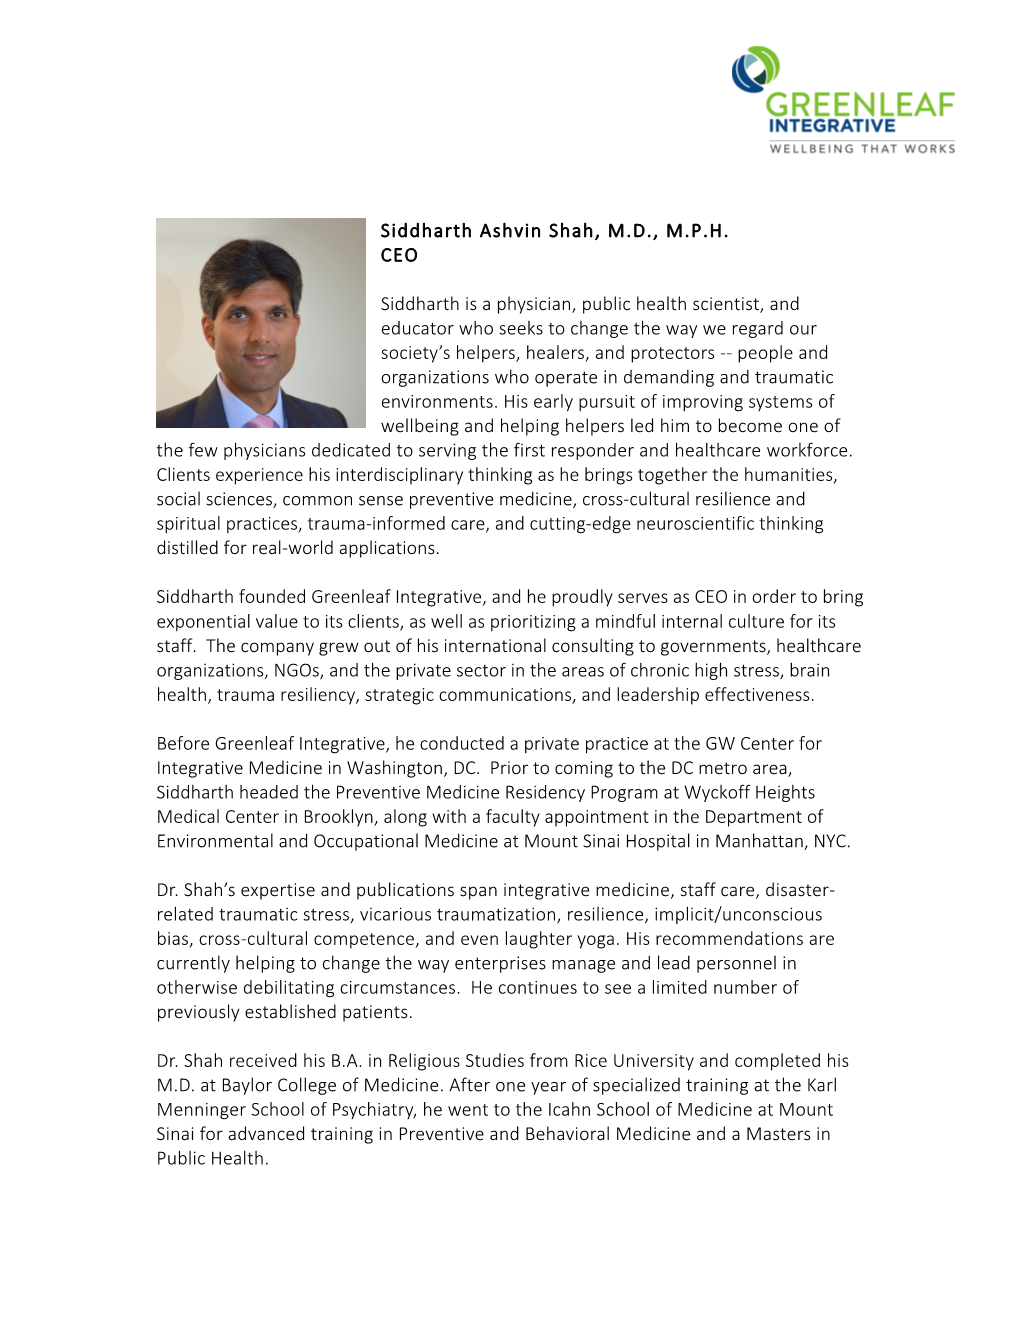 Download Bio of Our CEO Siddharth Ashvin Shah, M.D., M.P.H